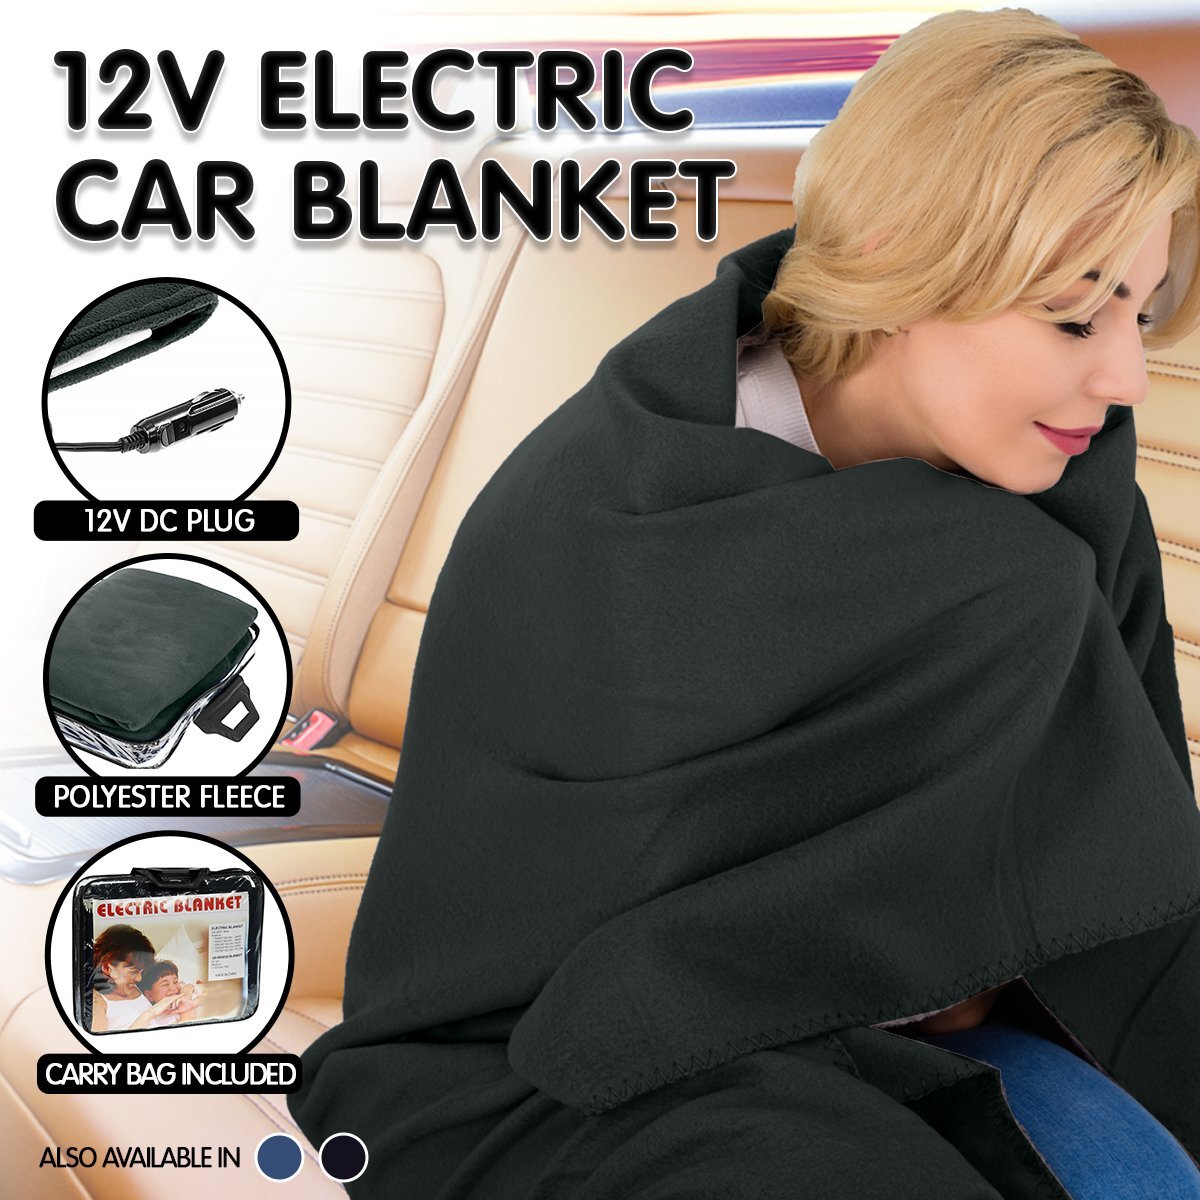 Heated Electric Car Blanket 150x110cm 12V – Black